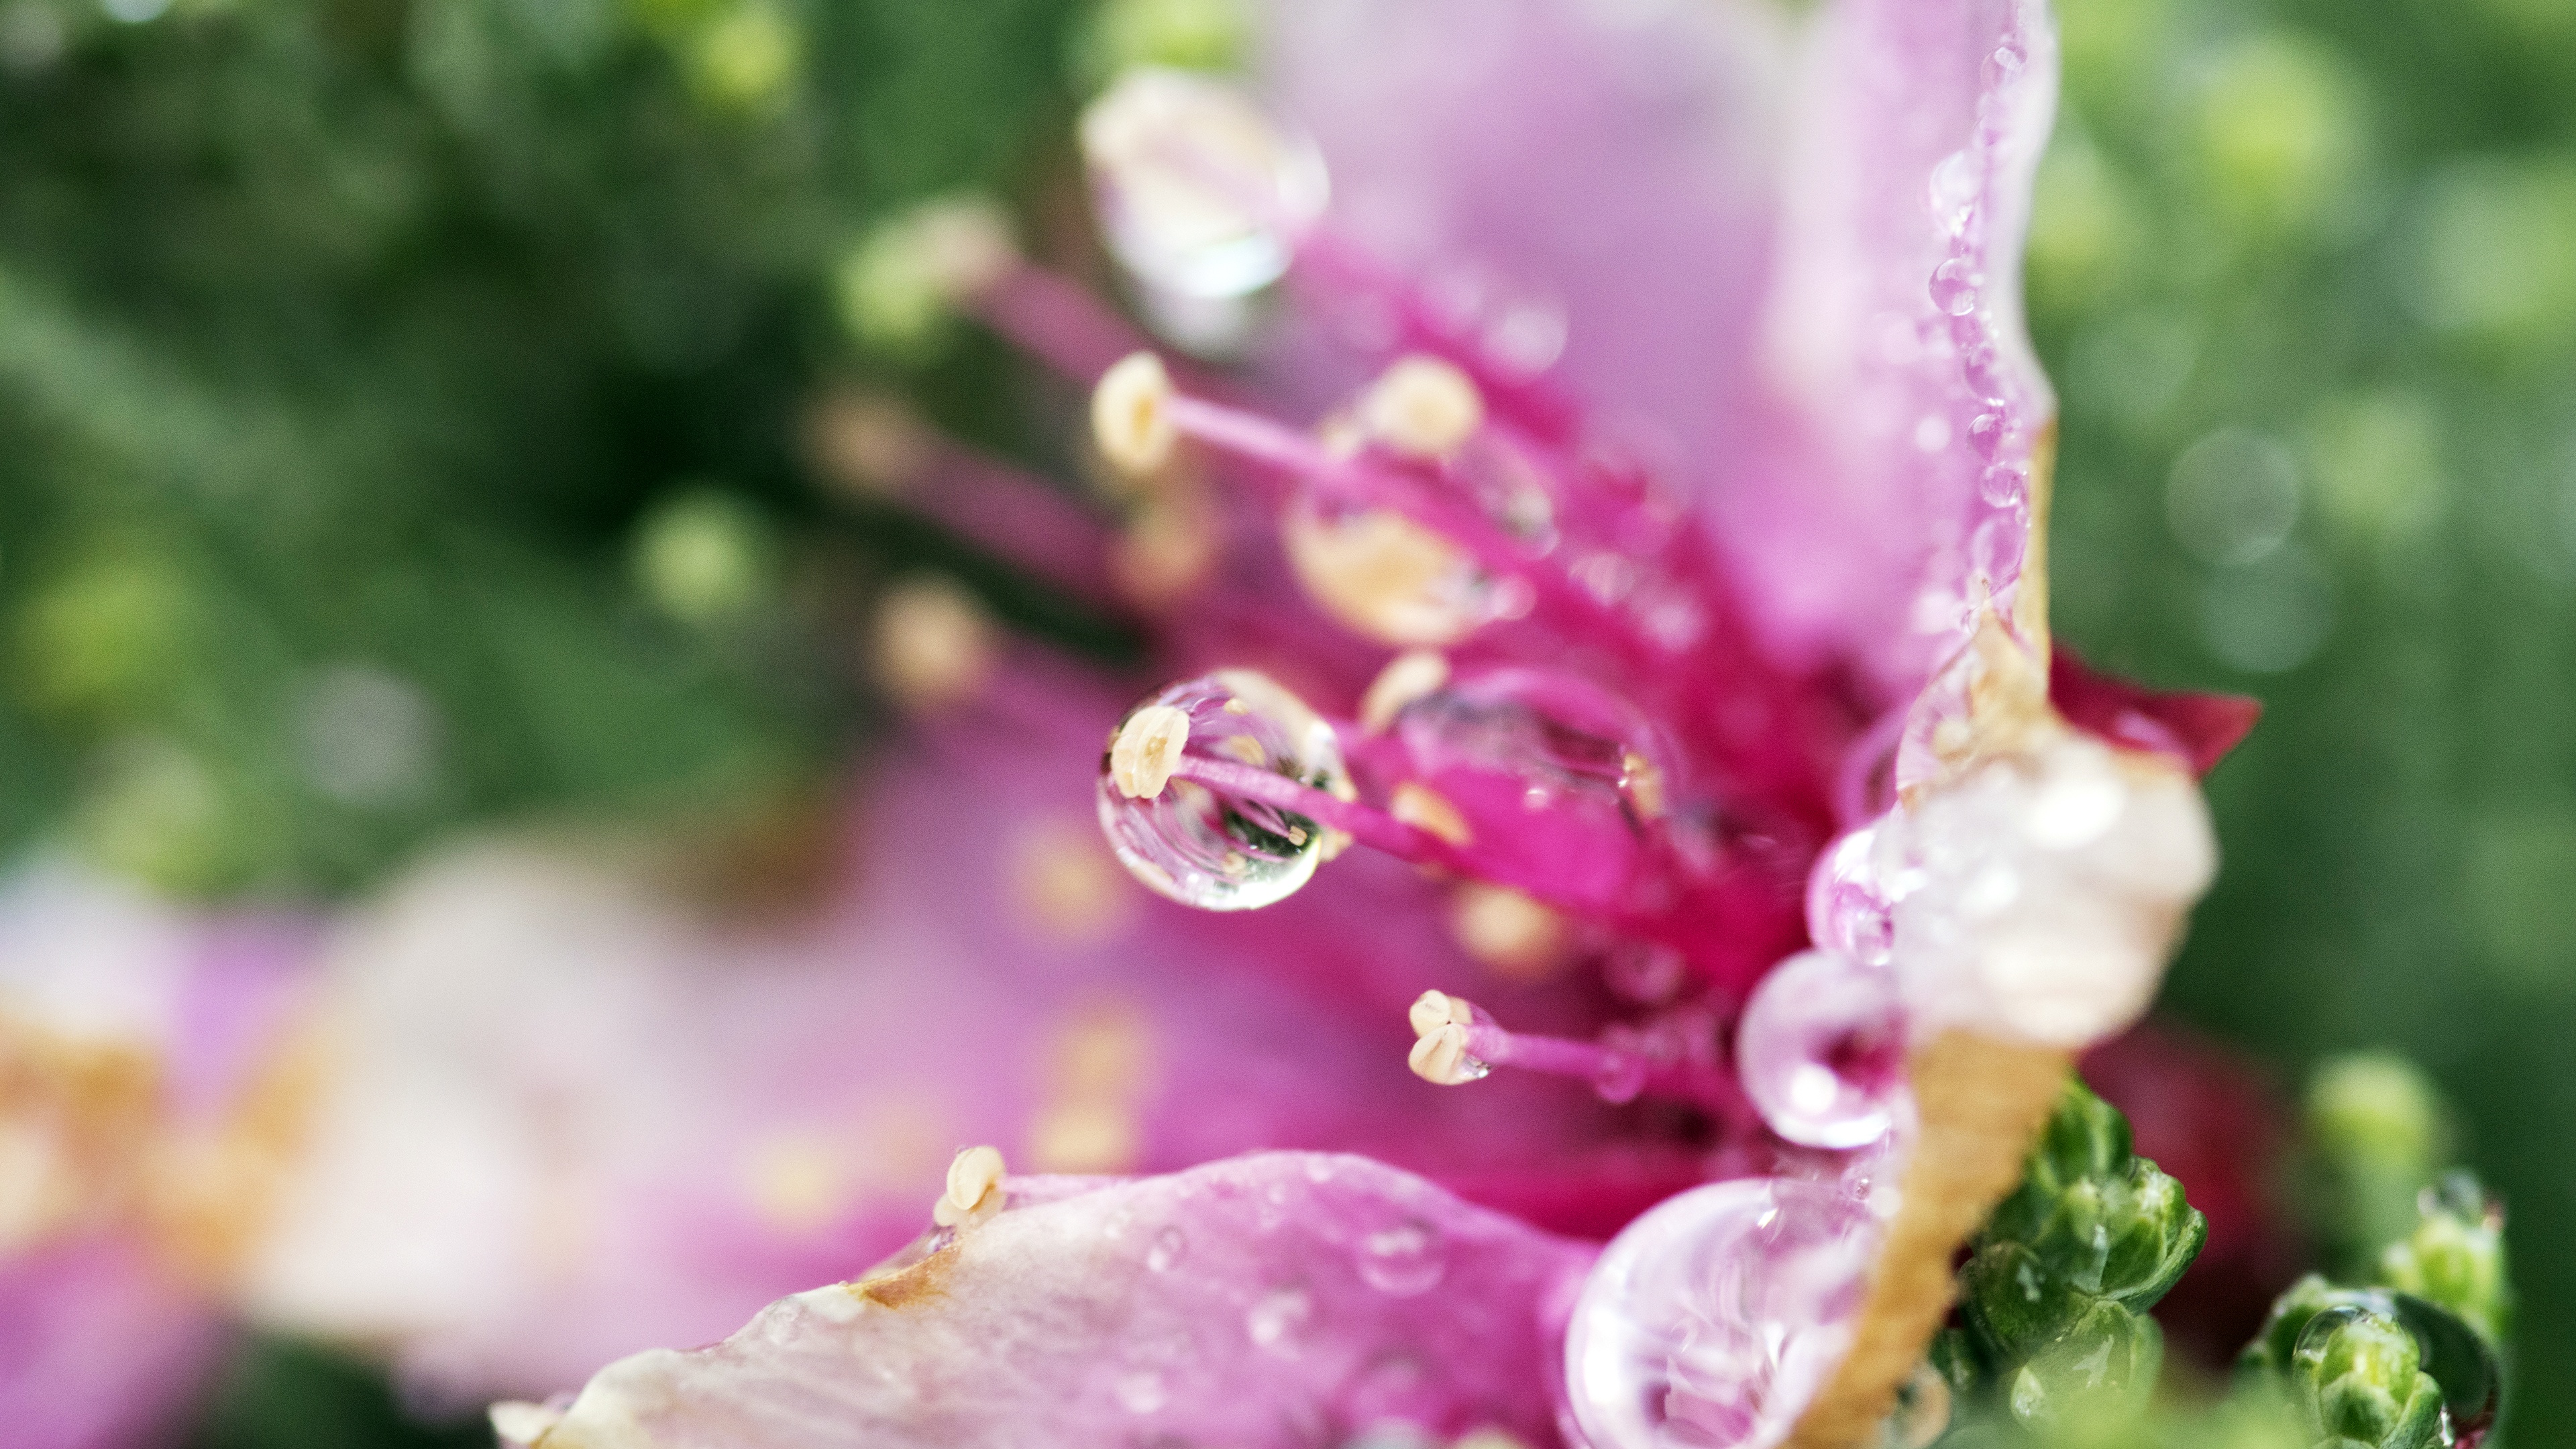 flower droplets 3840 x 2160 25